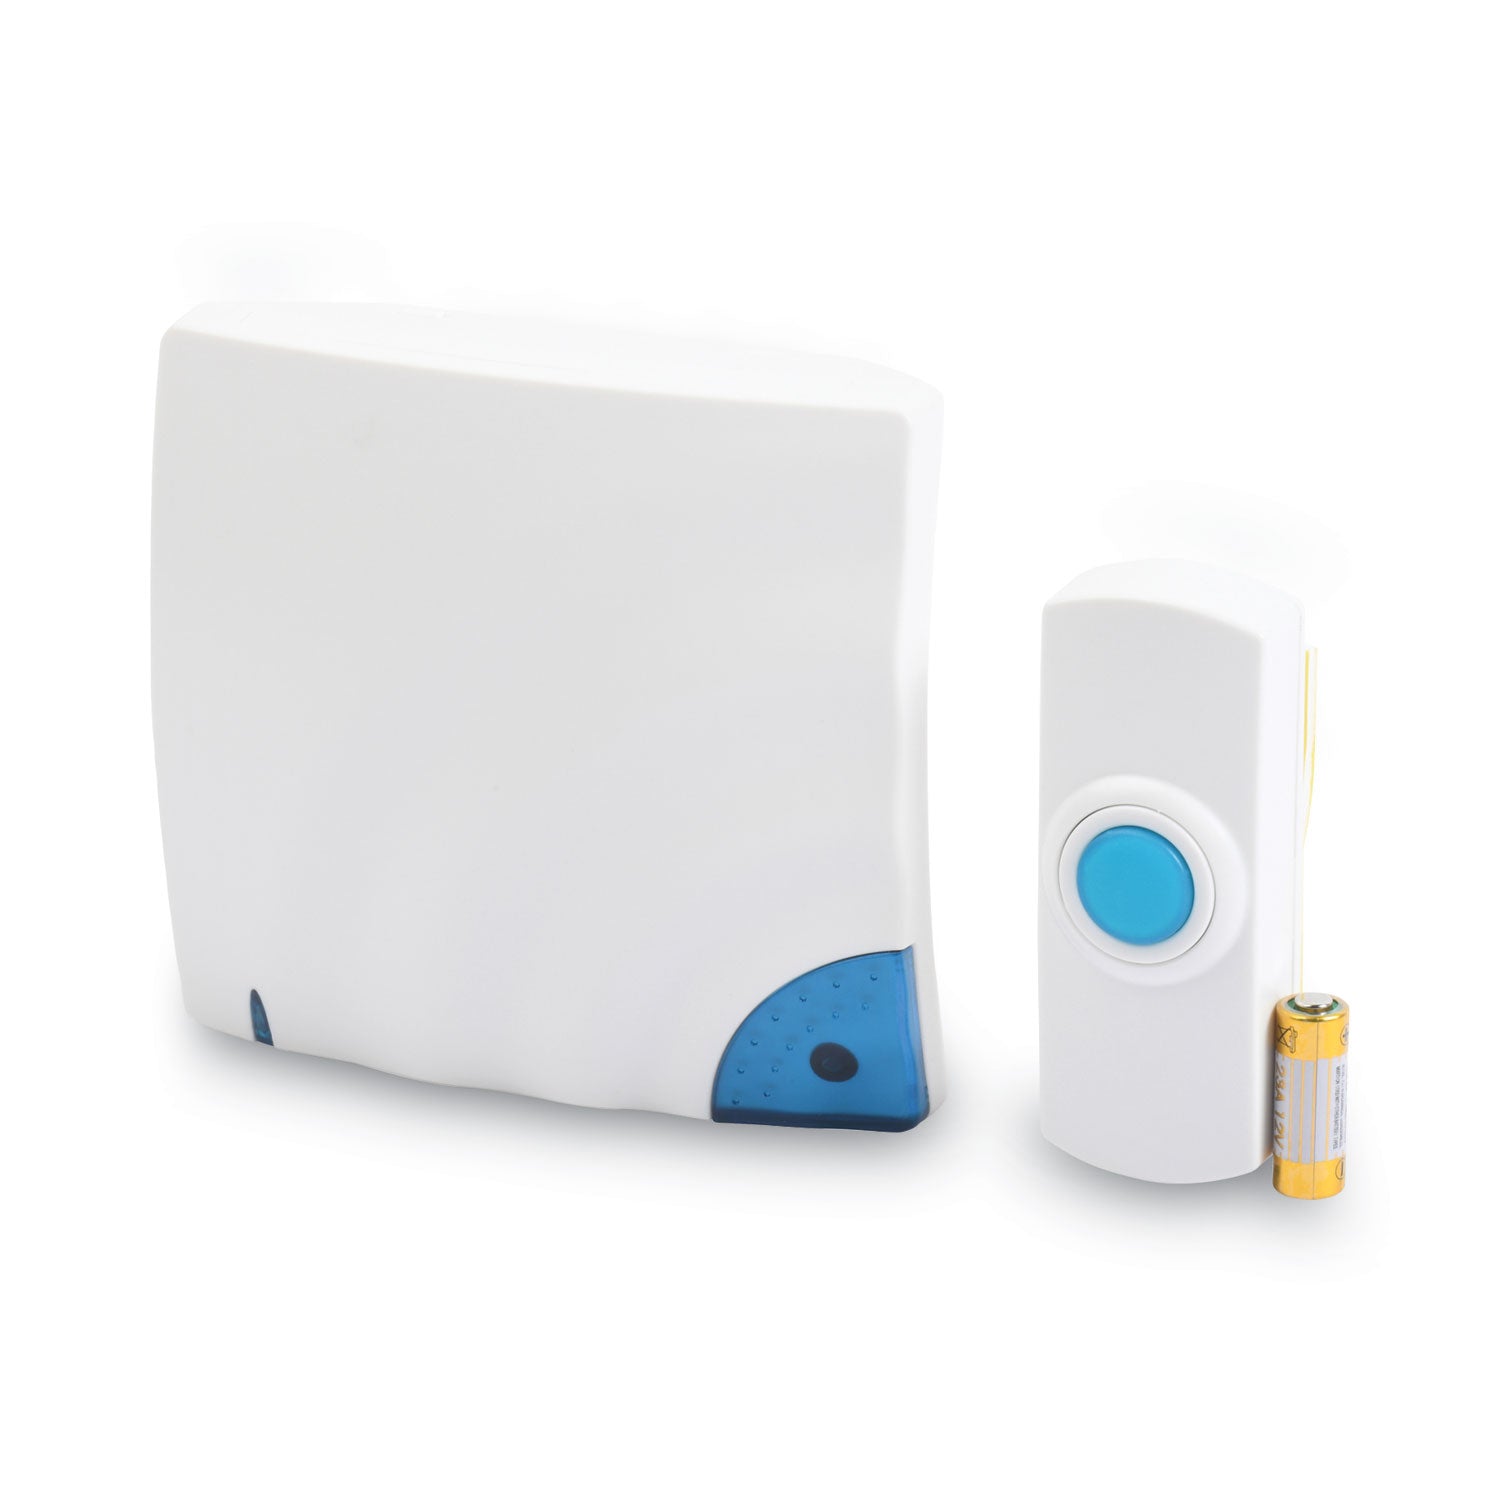 Wireless Doorbell, Battery Operated, 1.38 x 0.75 x 3.5, Bone - 